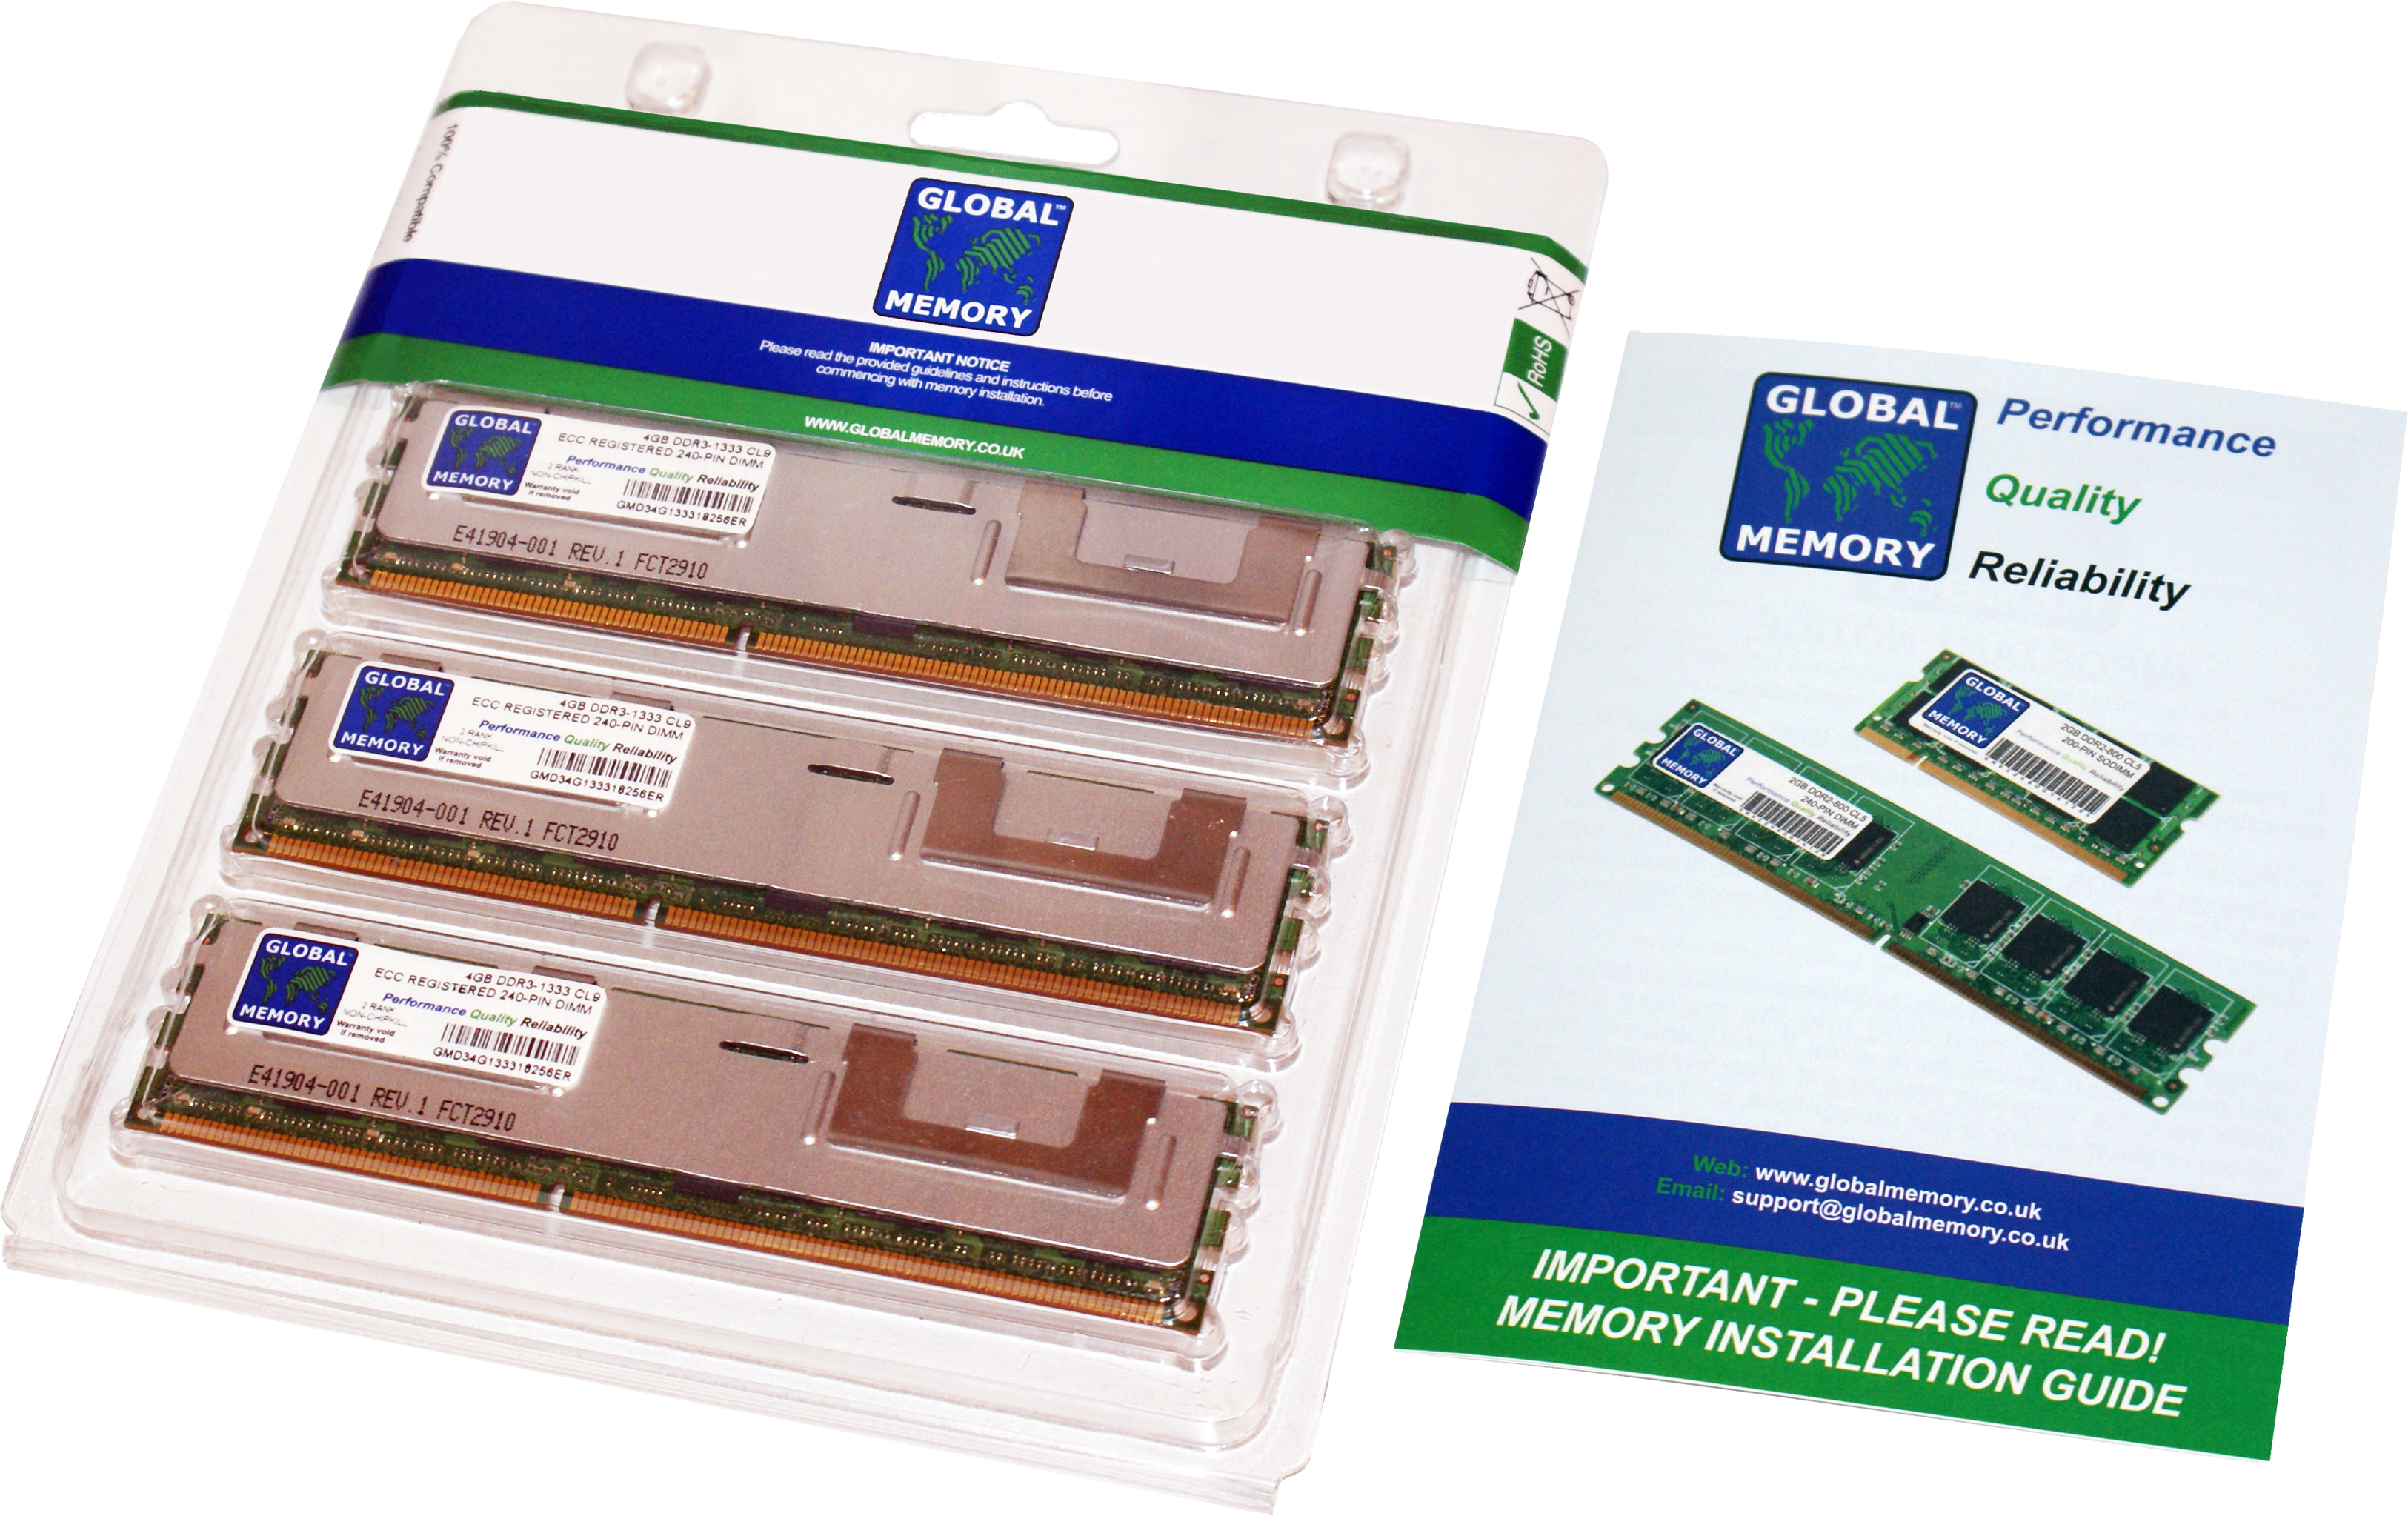 48GB (3 x 16GB) DDR3 1066/1333MHz 240-PIN ECC REGISTERED DIMM (RDIMM) MEMORY RAM KIT FOR DELL SERVERS/WORKSTATIONS (12 RANK KIT NON-CHIPKILL)